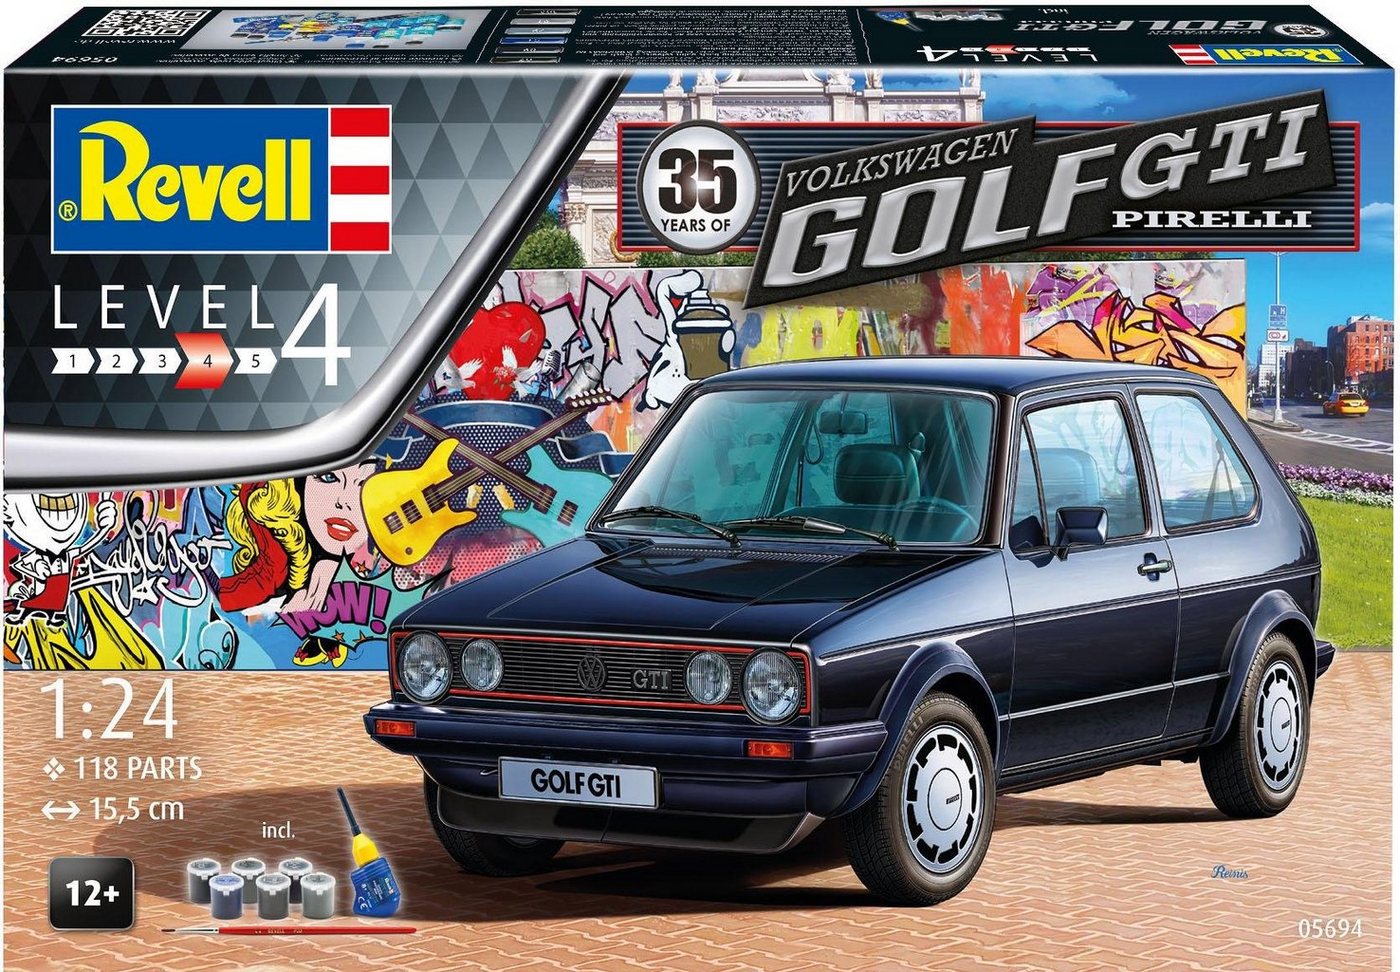 Revell® Modellbausatz Model Set 35 Jahre VW Golf GTI Pirelli, Maßstab 1:24, (Set), Made in Europe von Revell®